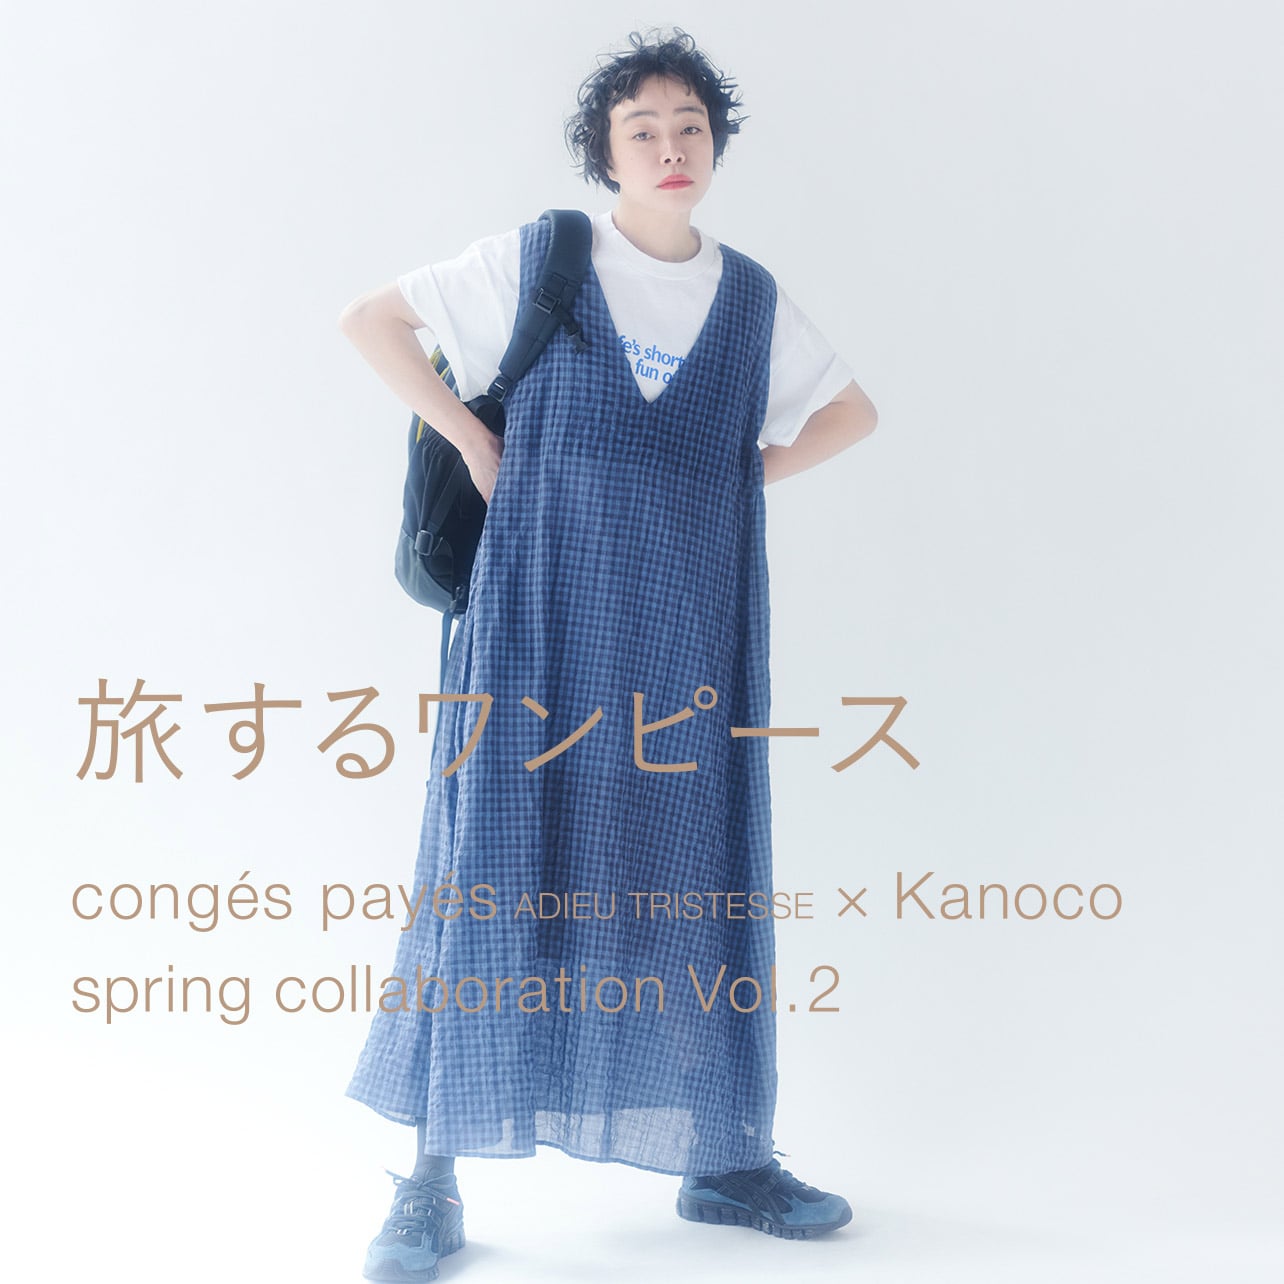 congés payés×Kanoco spring collaboration vol.2